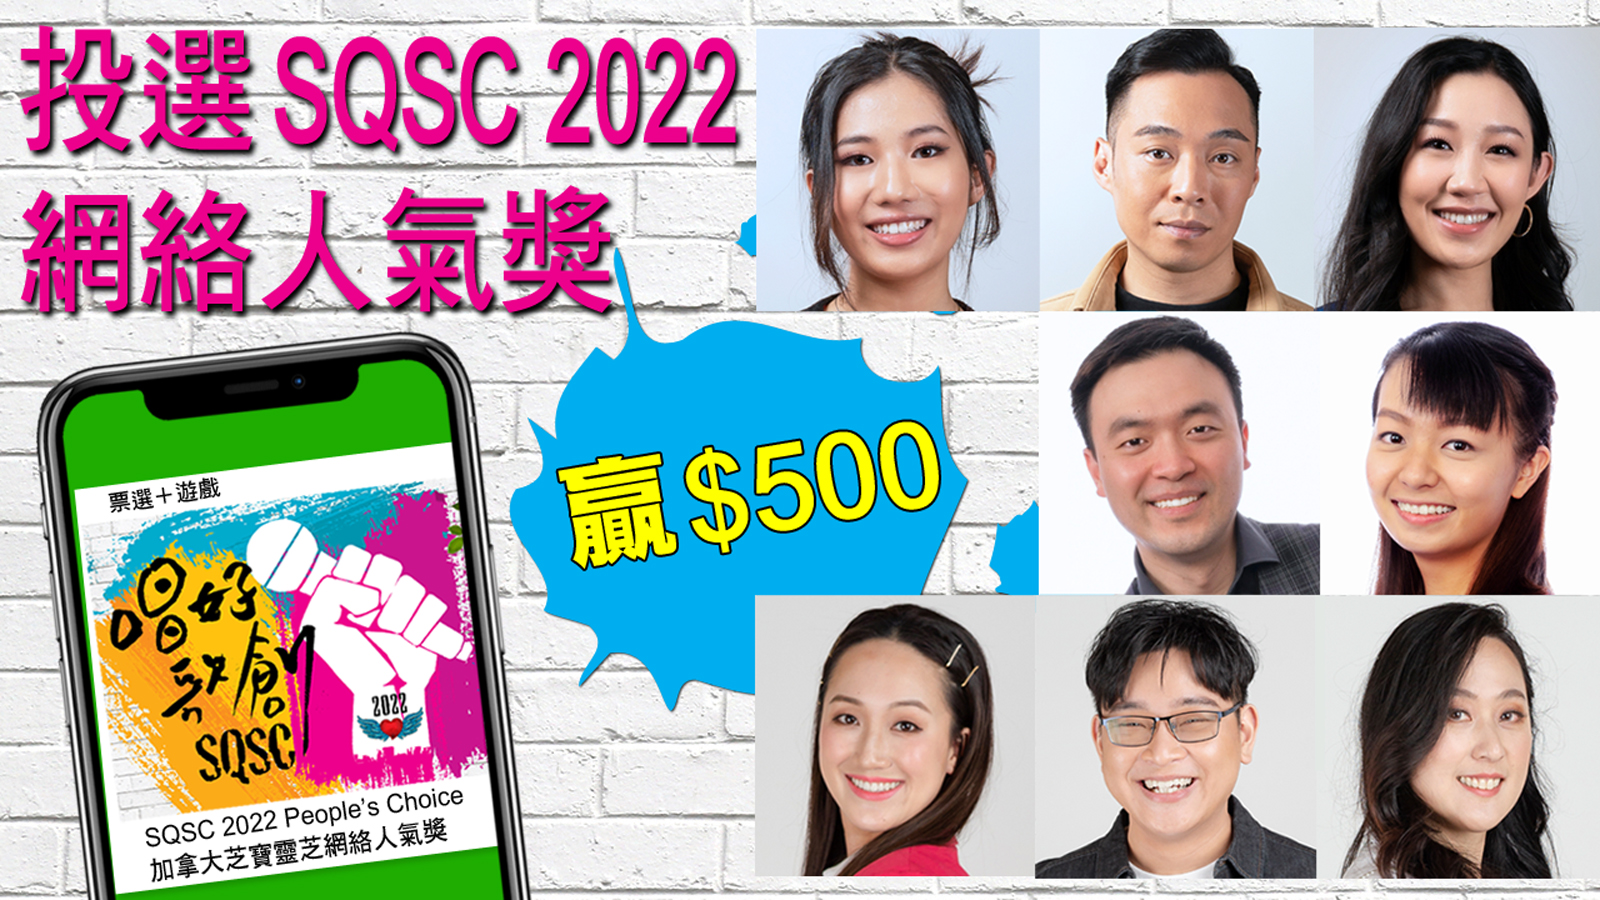 SQSC 2022 People's Choice 投選「加拿大芝寶靈芝 網絡人氣獎」贏 $500 現金獎 [得獎名單公佈]